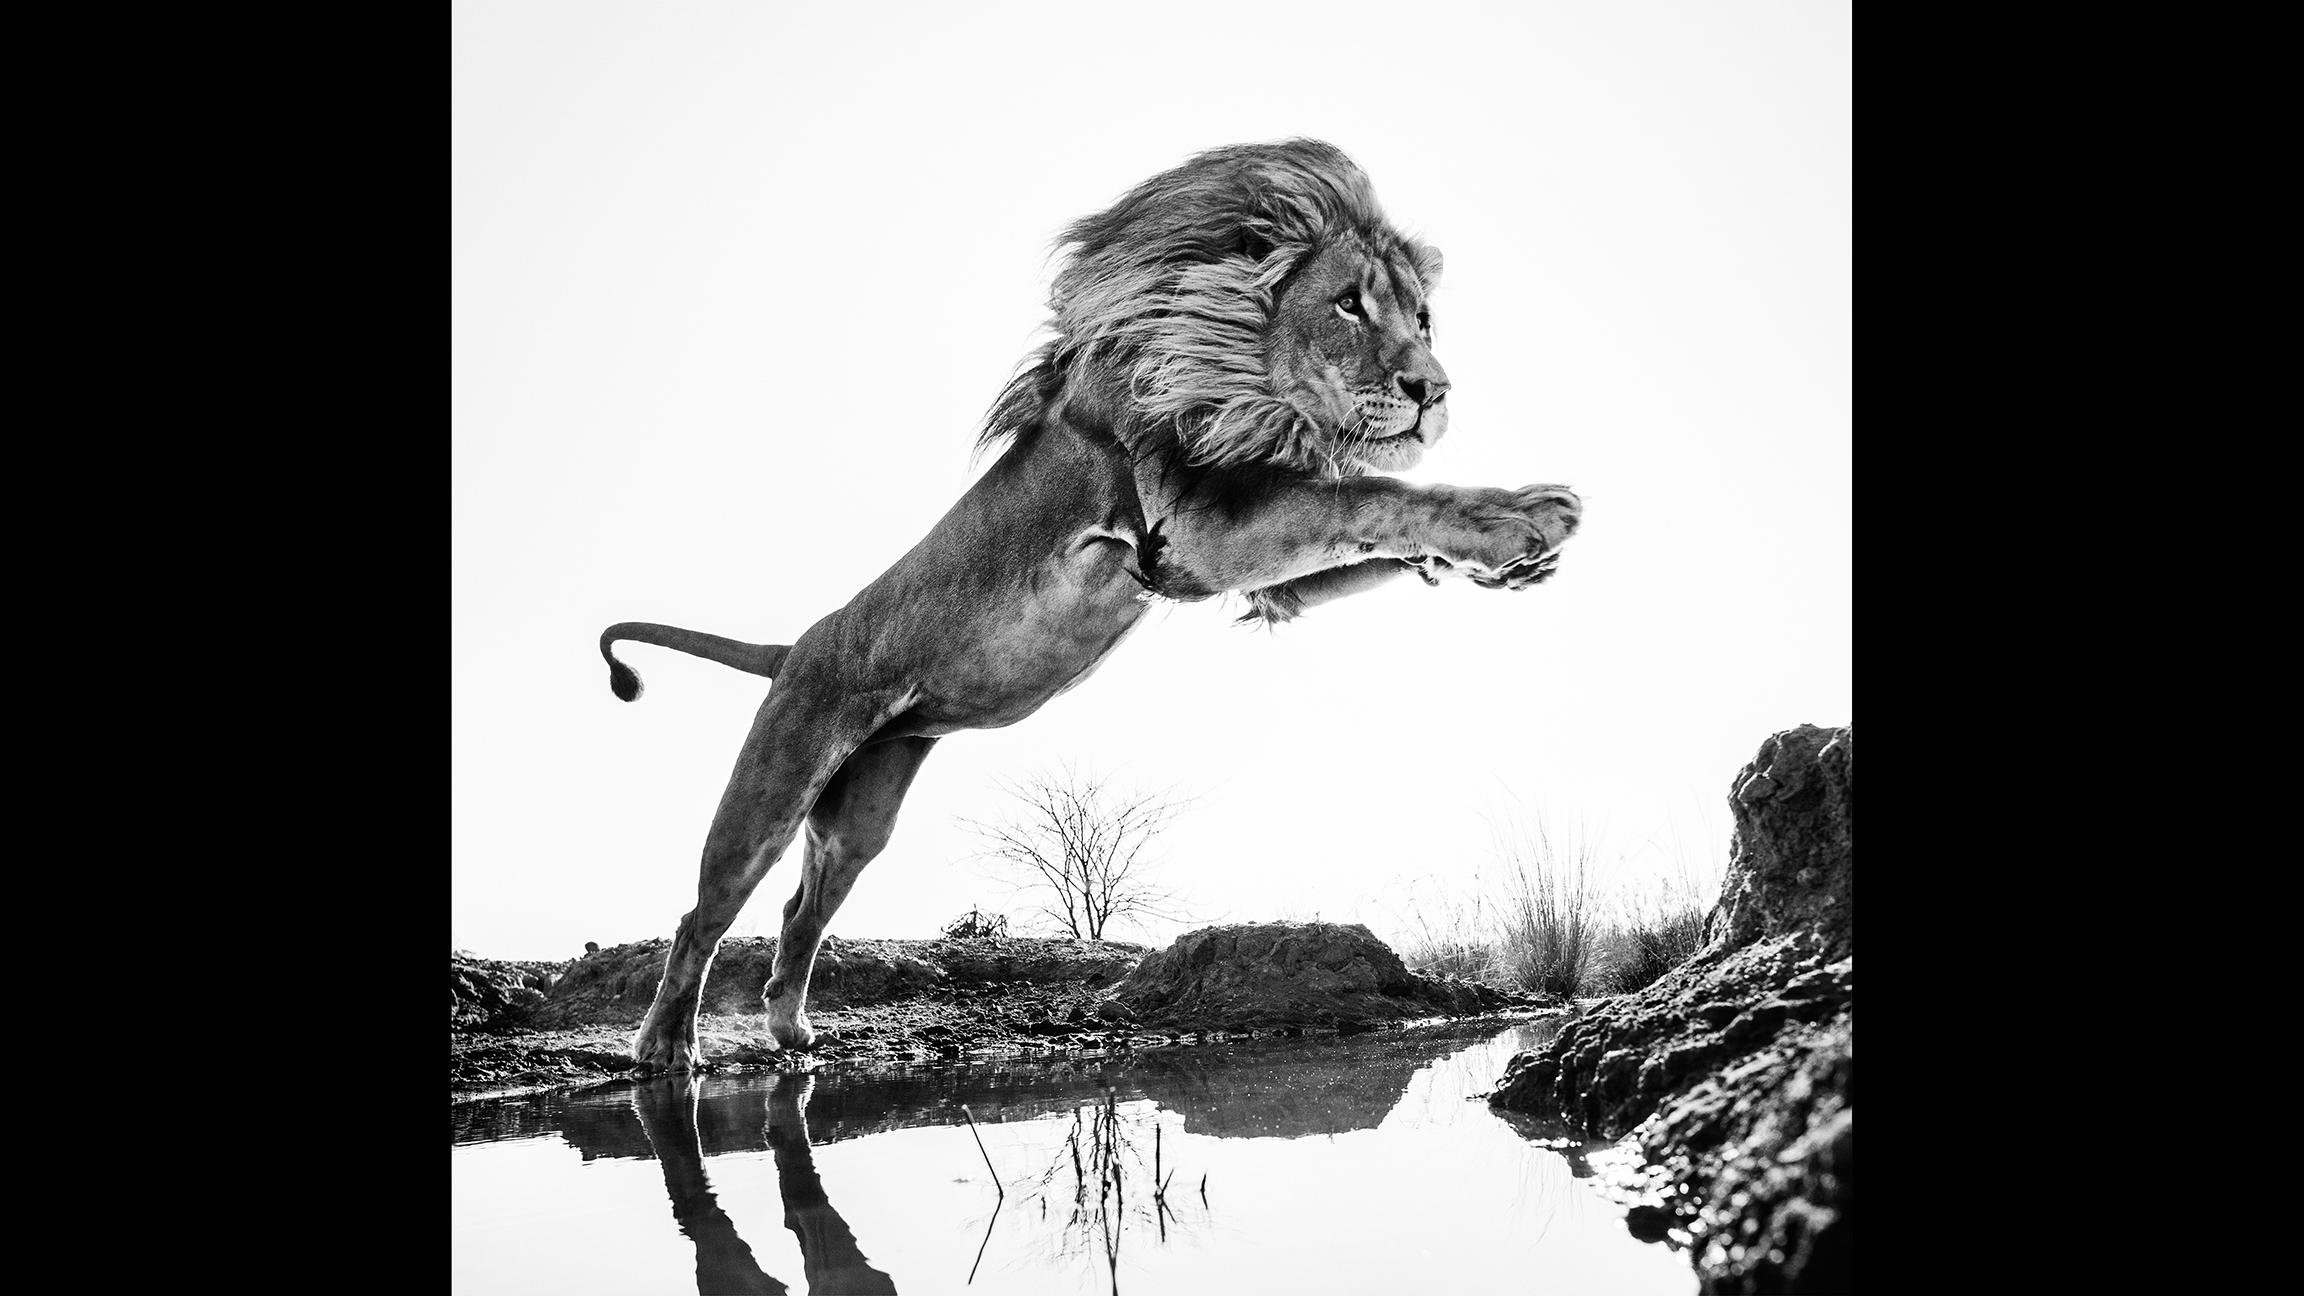 “Lion King” by David Yarrow